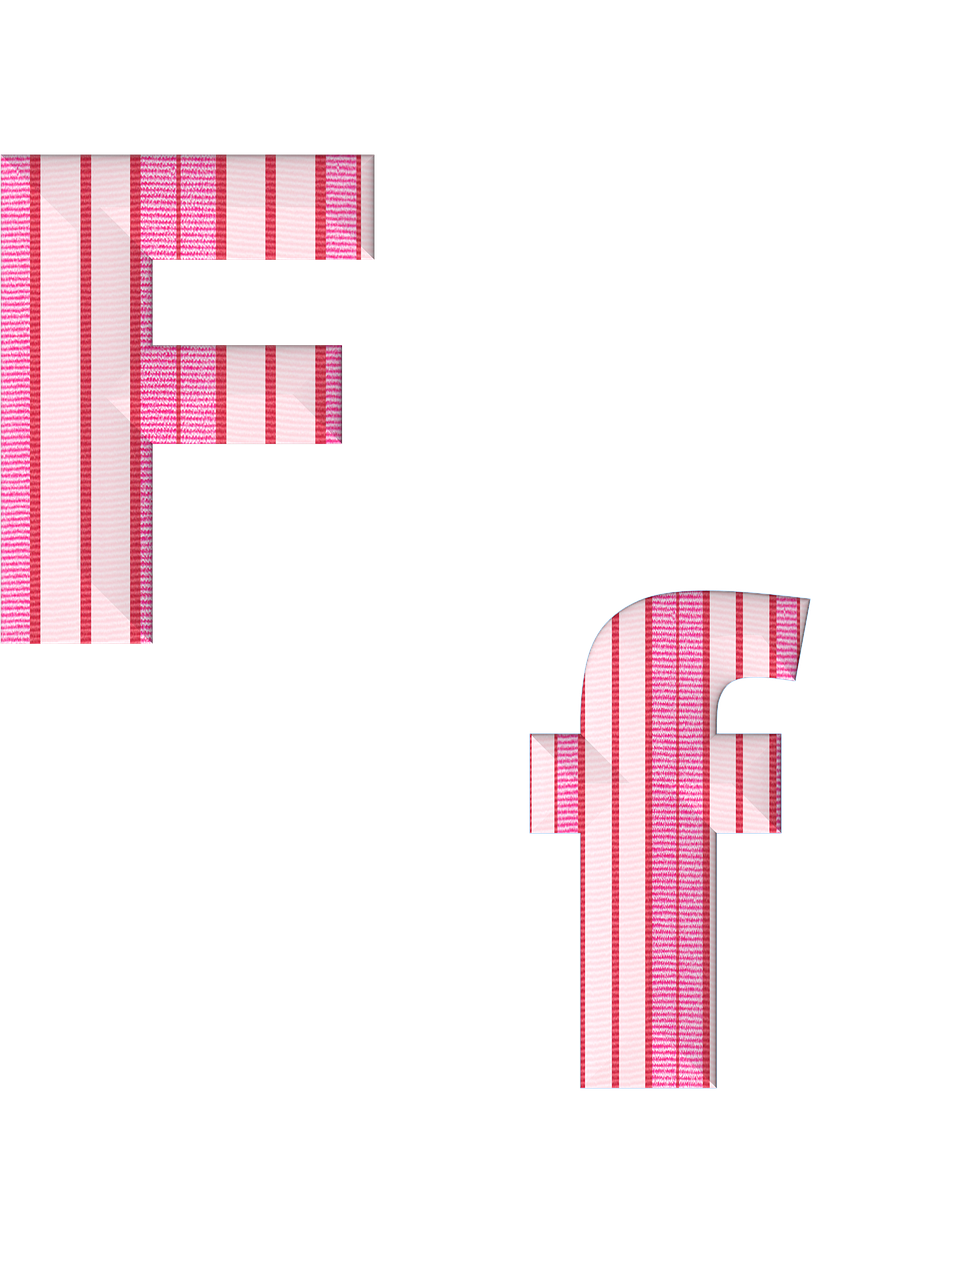 Download Free Photo Of Abc Alphabet F Fabric Stripes From Needpix Com